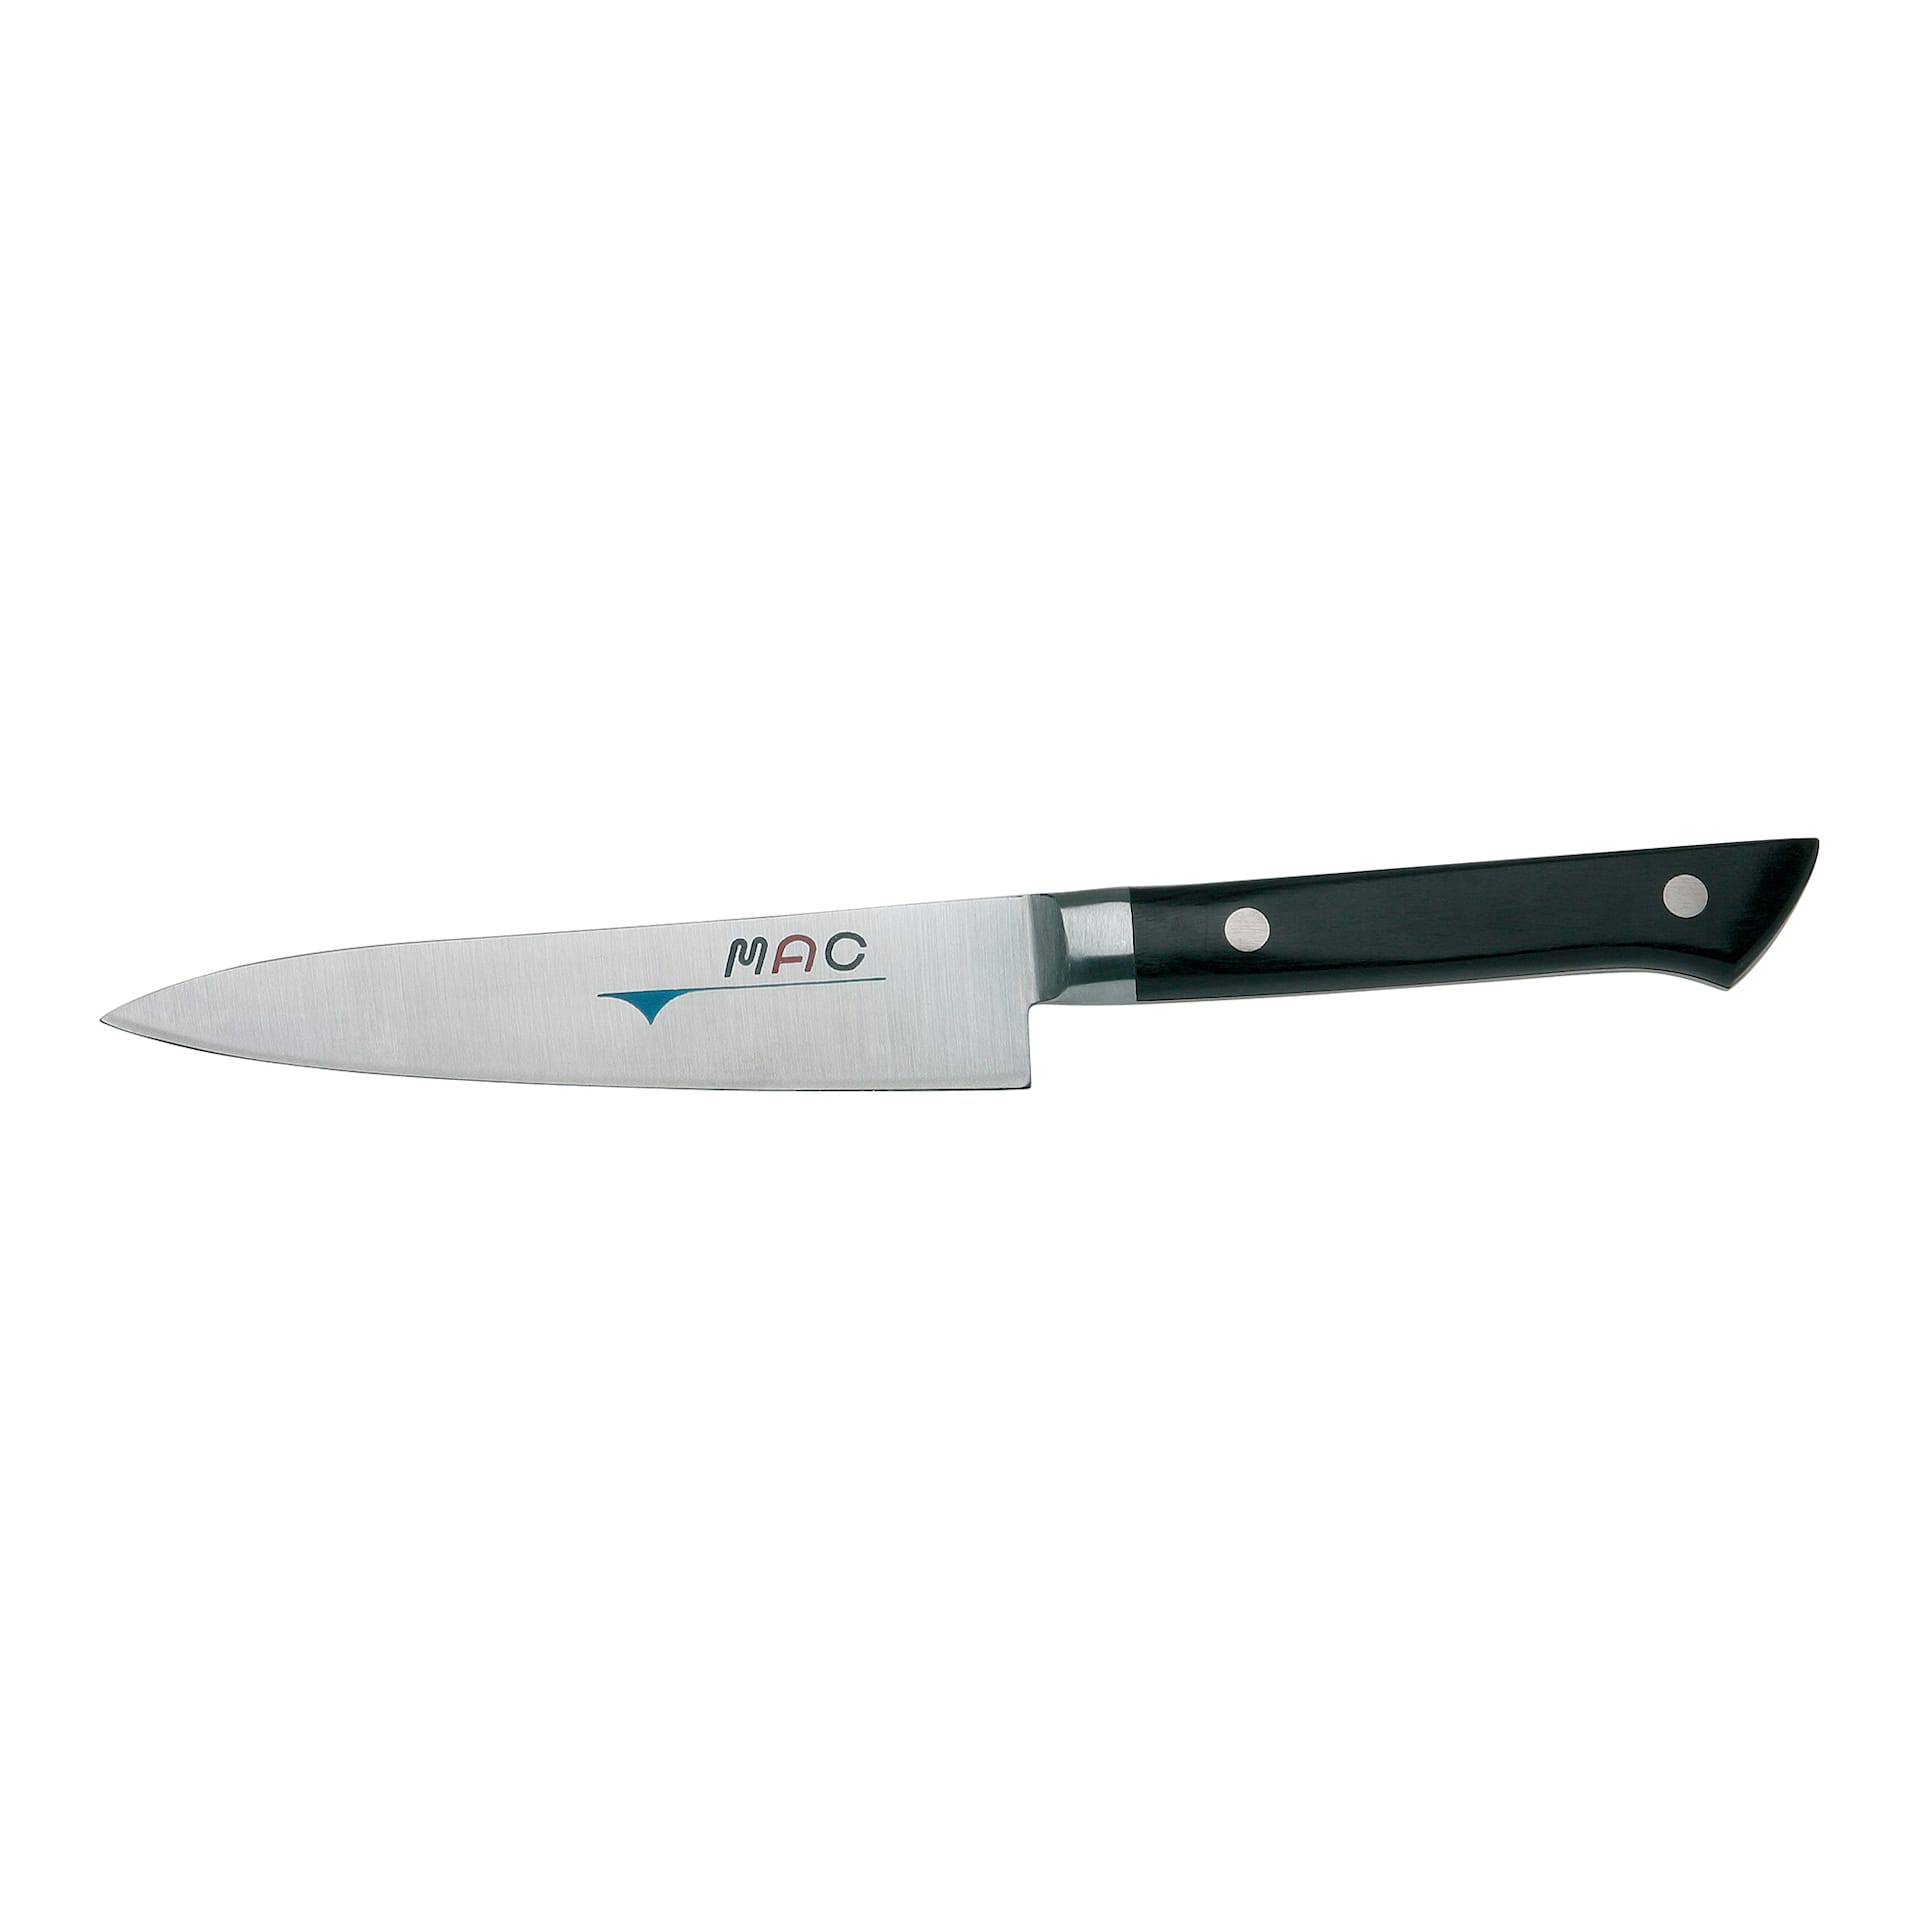 Pro - Vegetable knife, 12.5 cm - MAC - NO GA